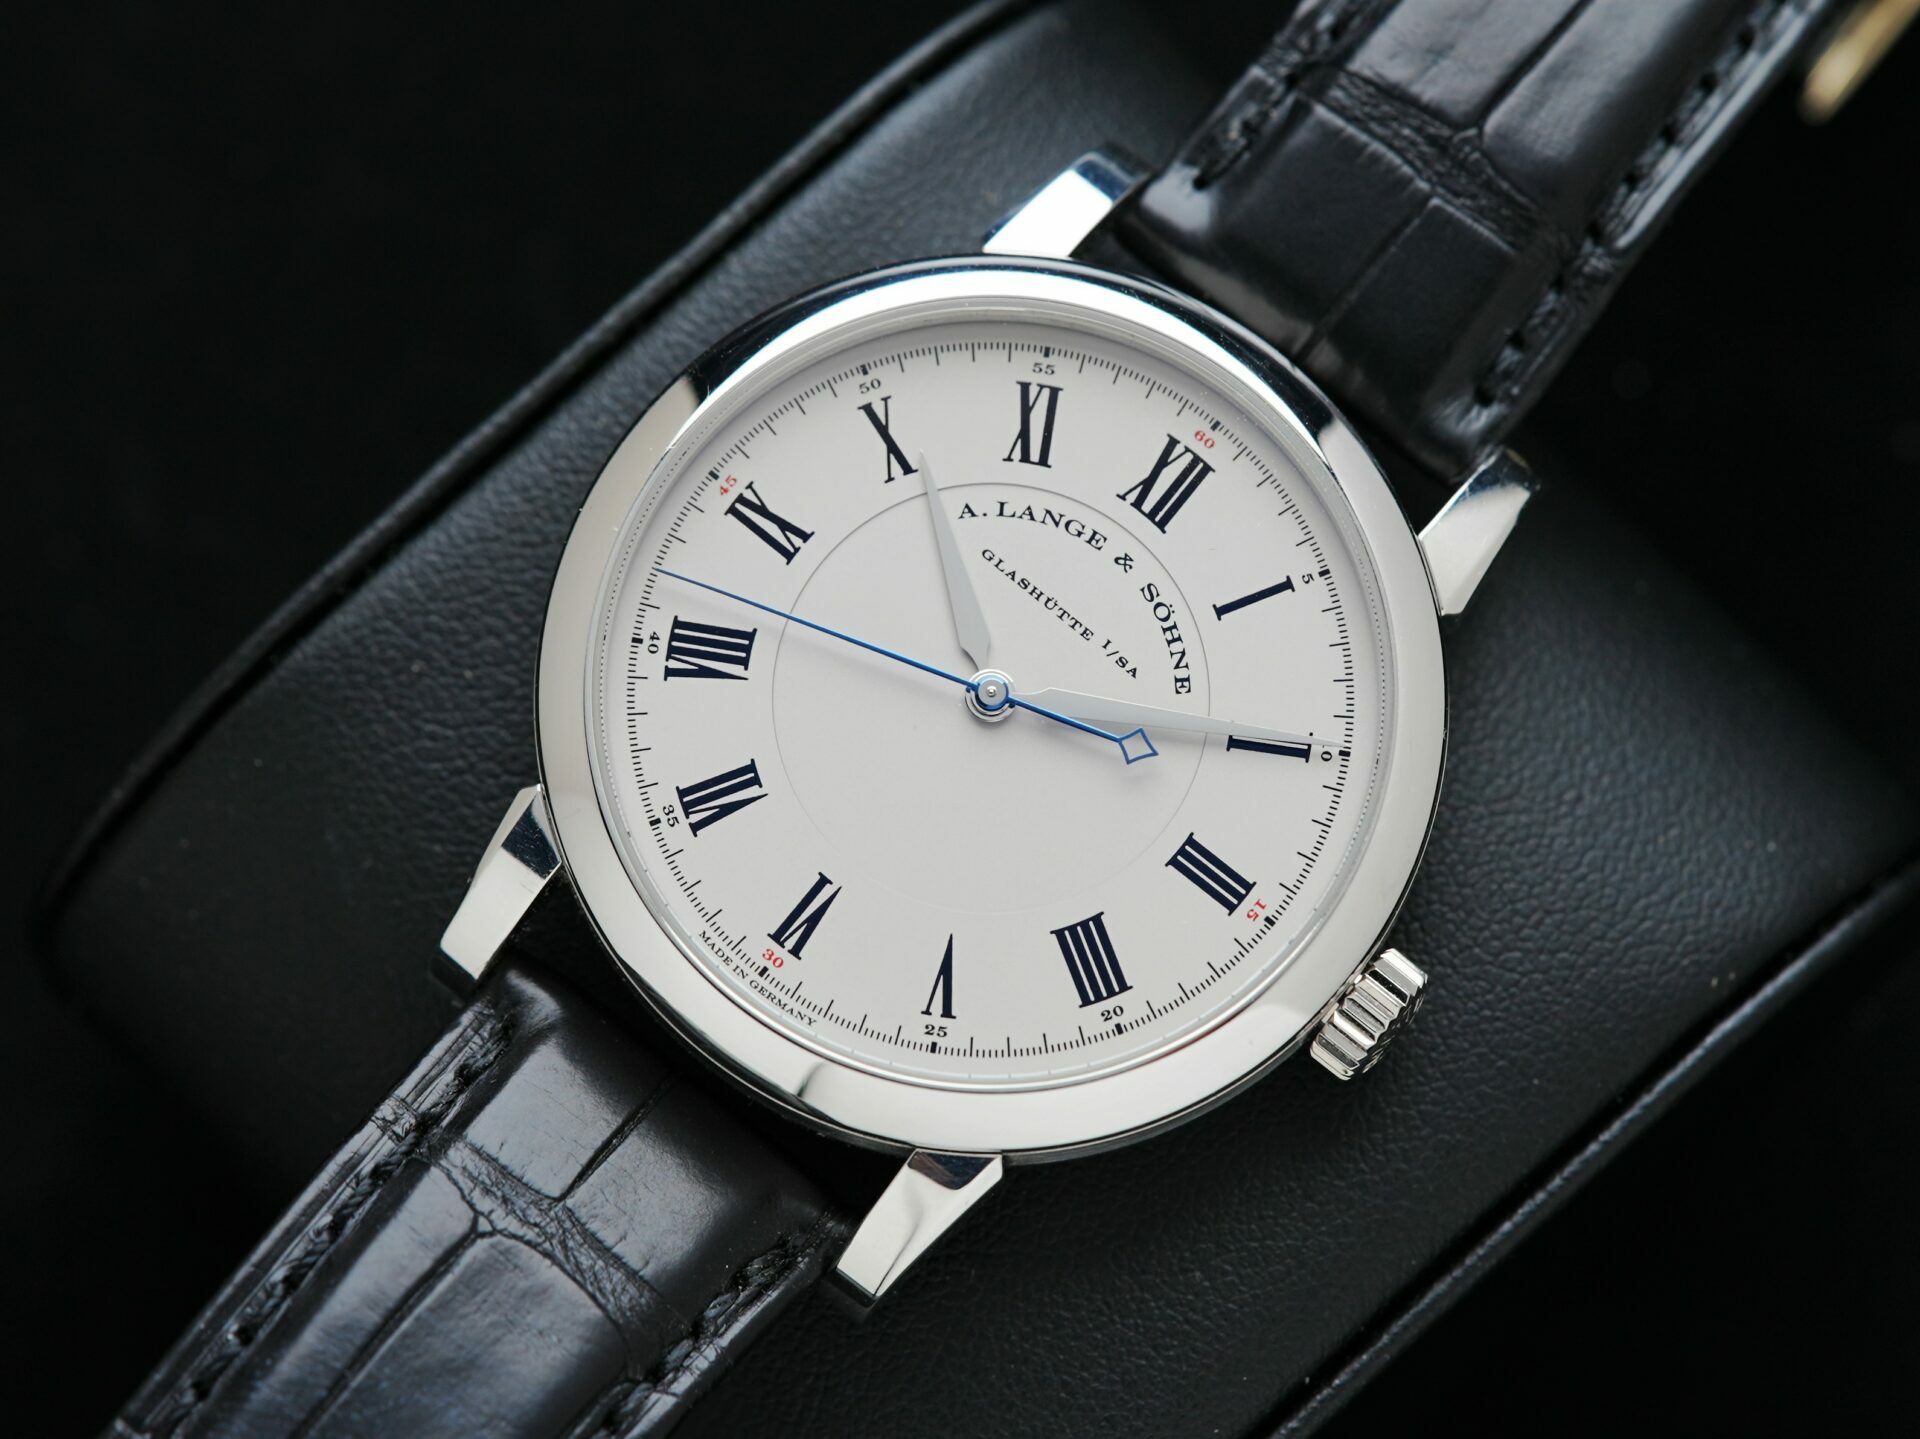 A. Lange & Söhne Richard Lange Platinum watch featured on watch pillow.